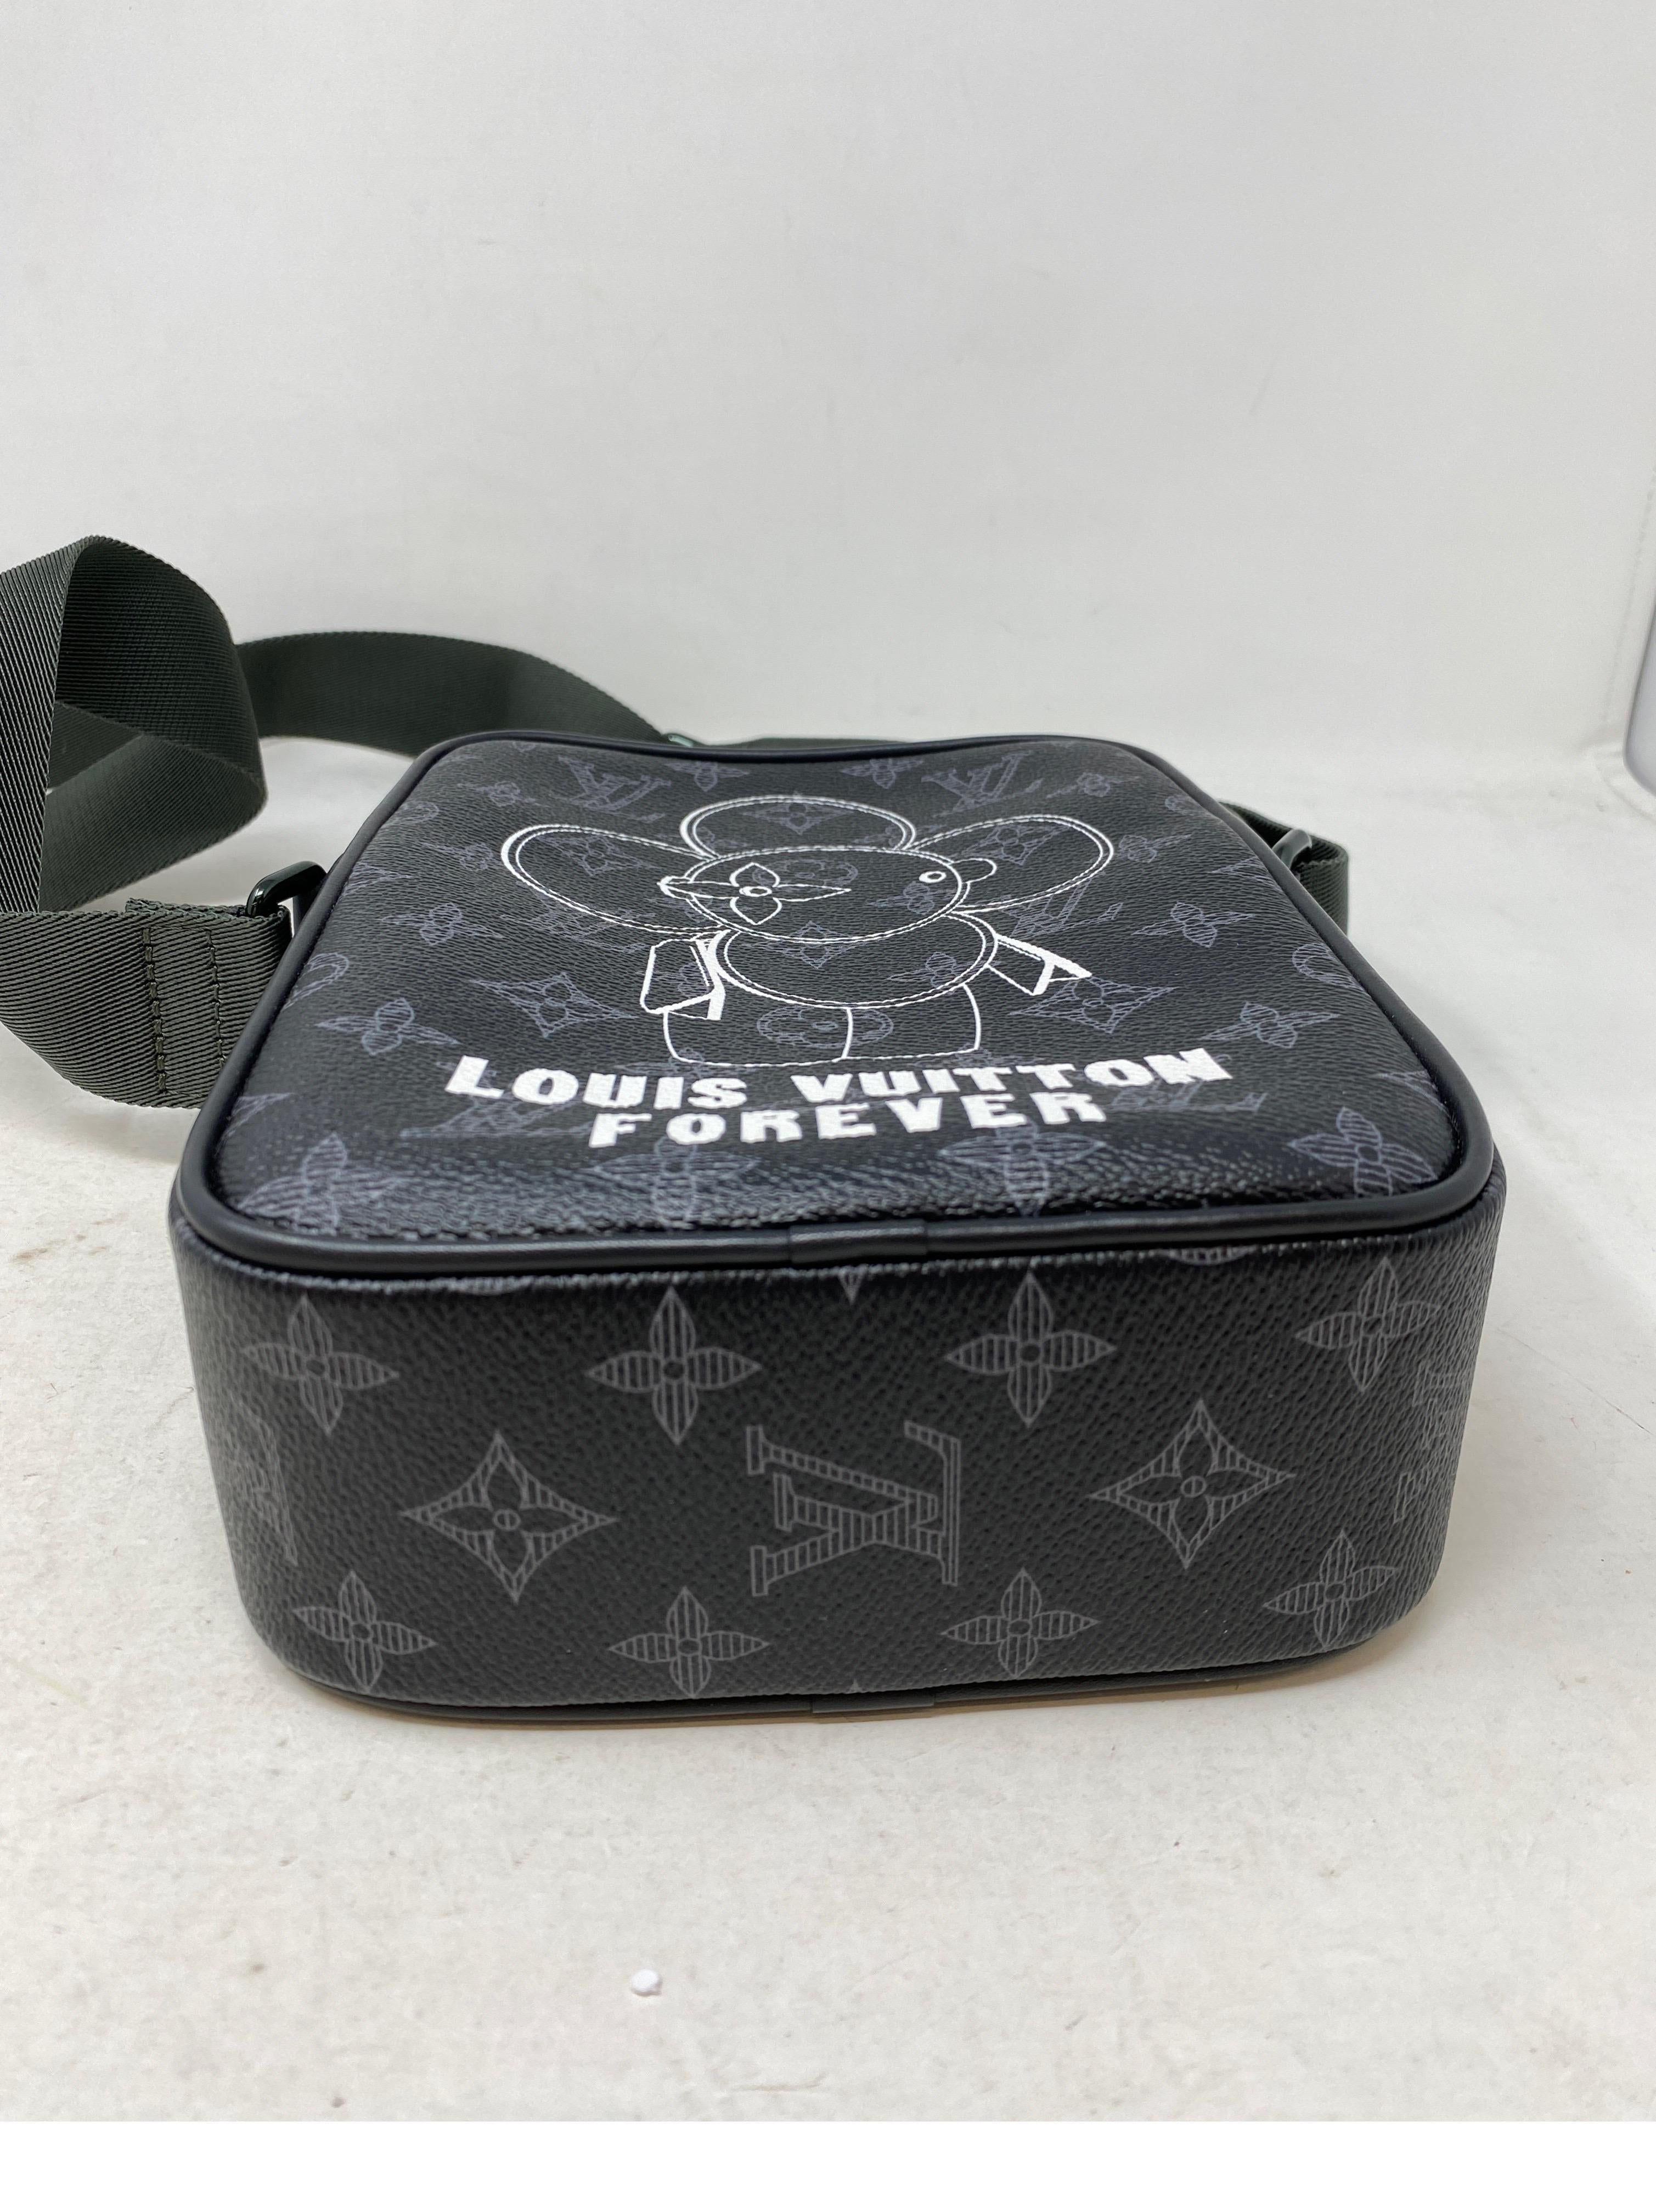 Louis Vuitton Forever Bag  5